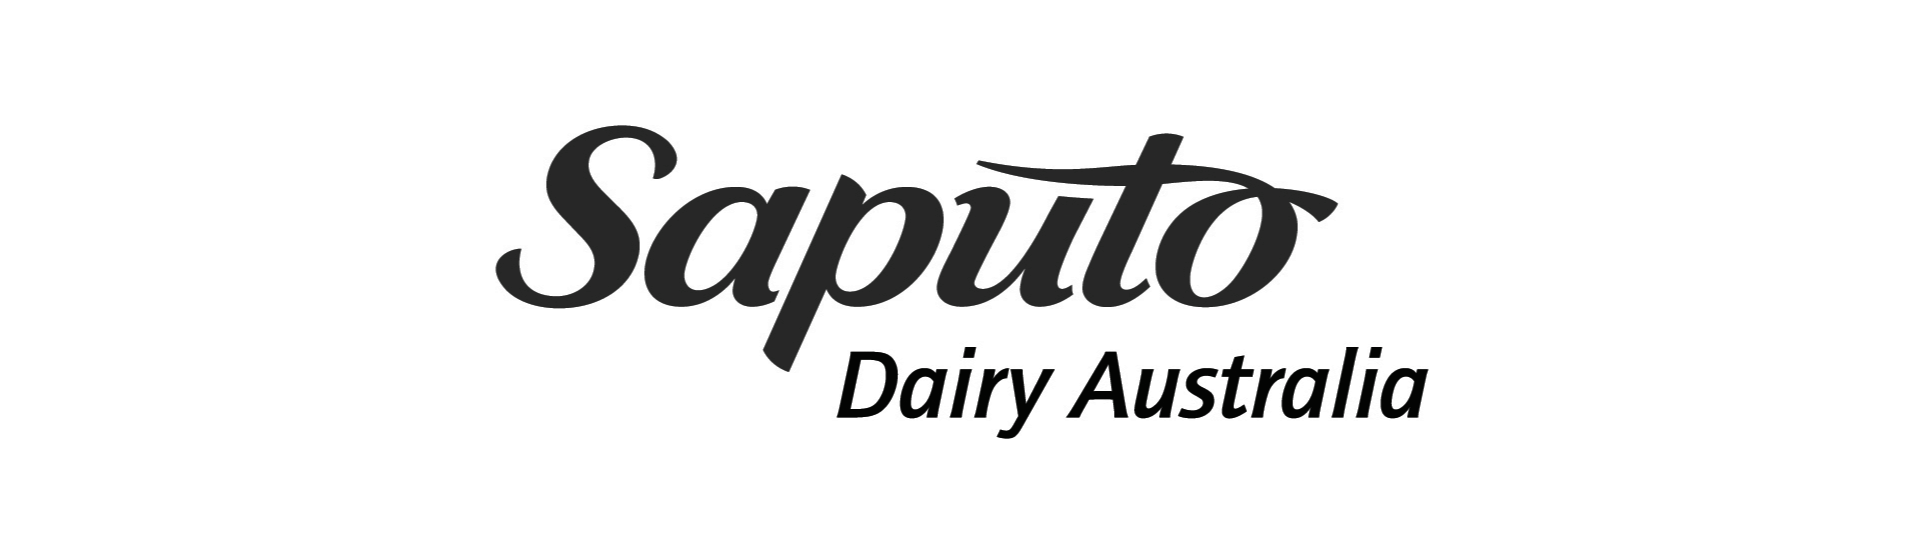 Saputo logo black text